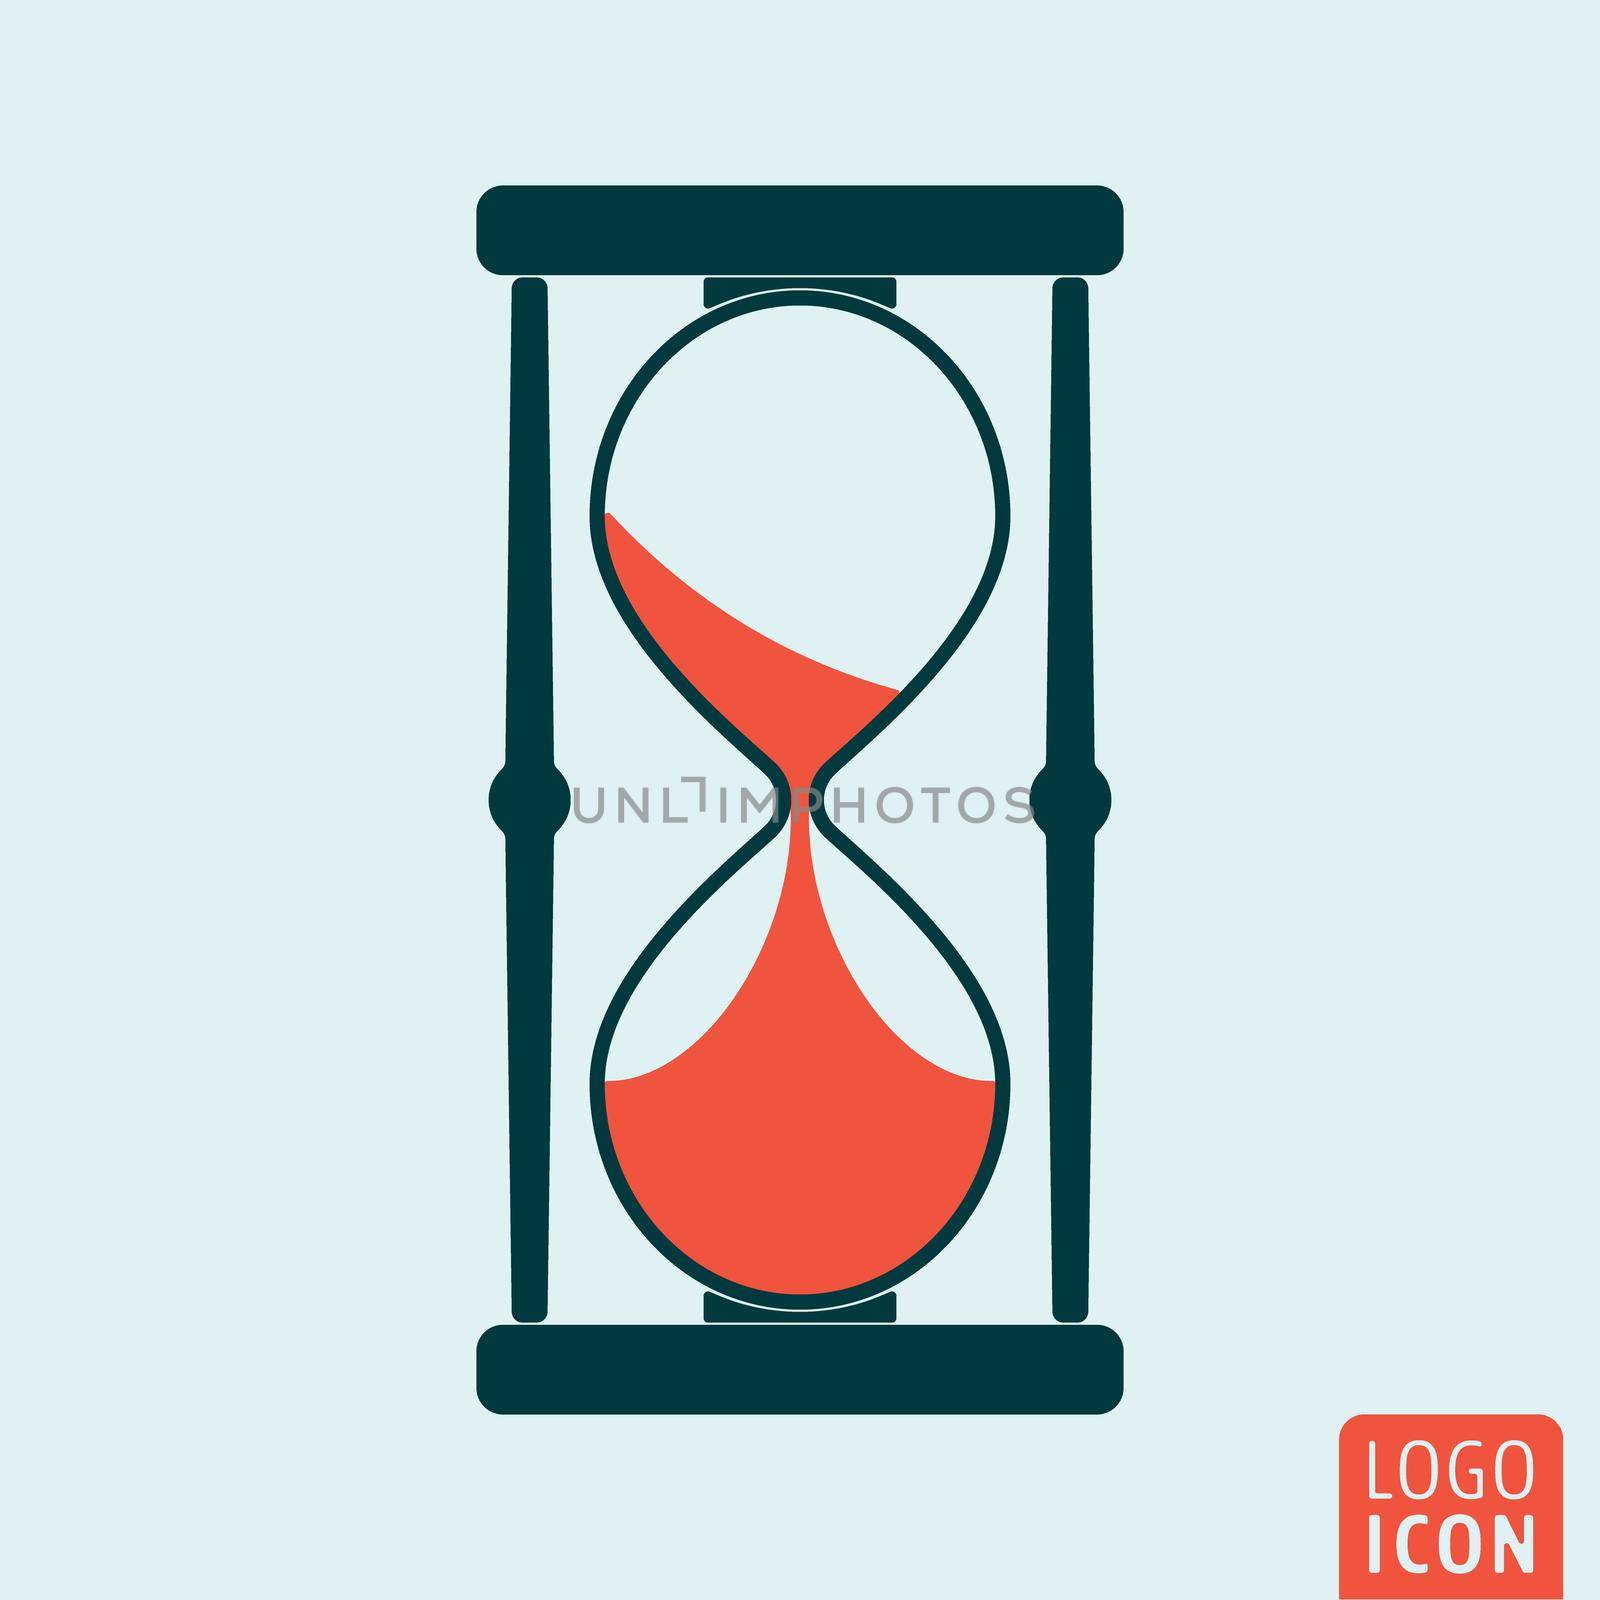 Sand clock icon by Bobnevv